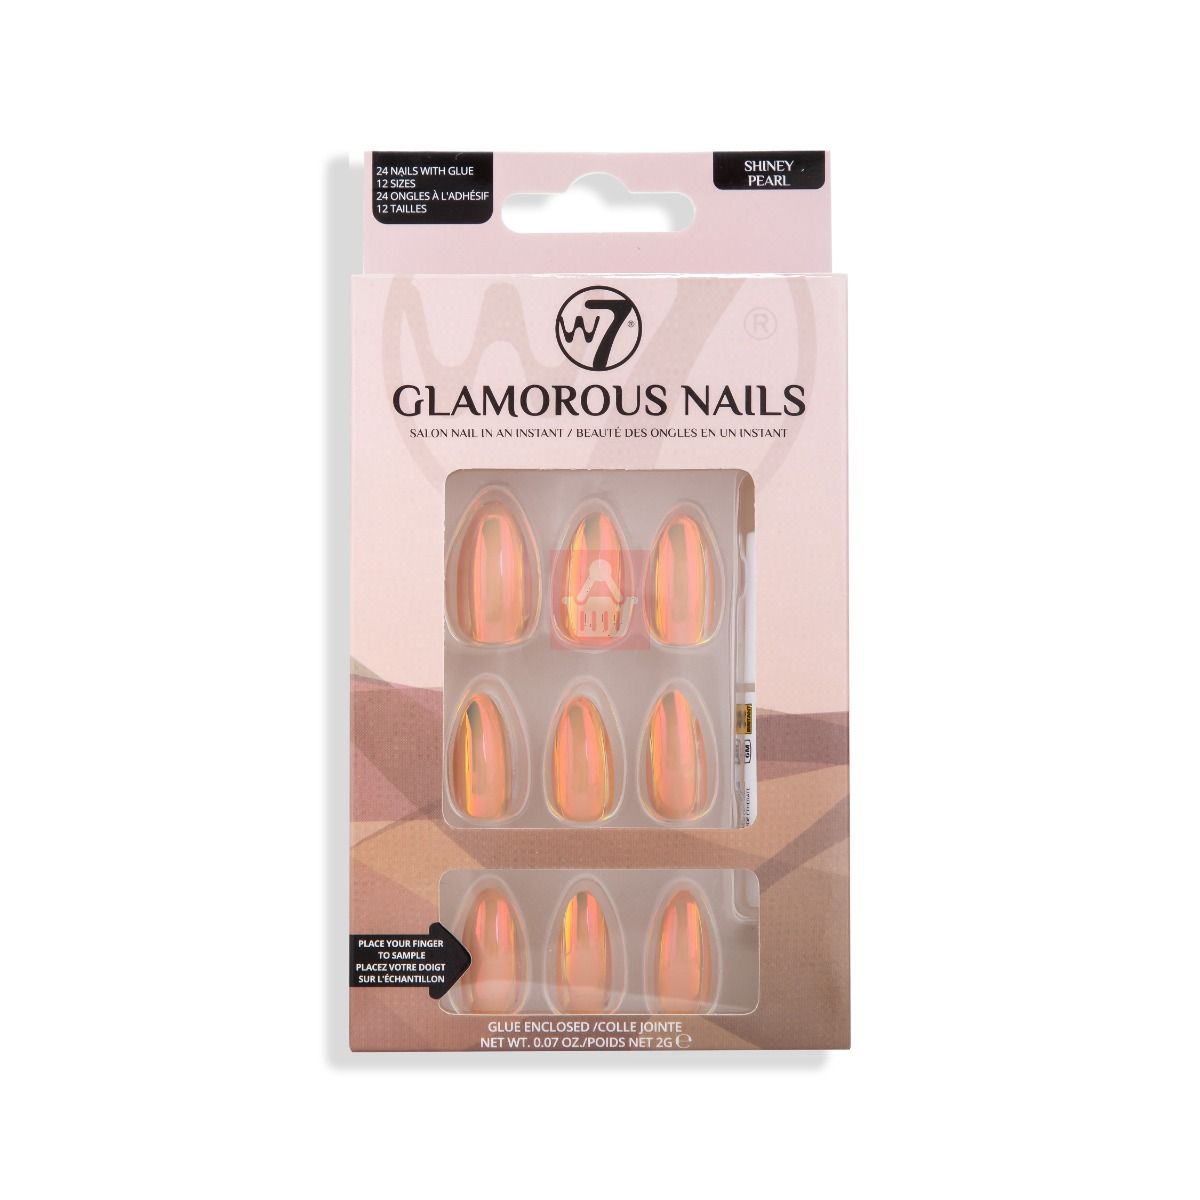 W7 Glamorous False Nails With Glue Glue Shiney Pearll 24 Pcs